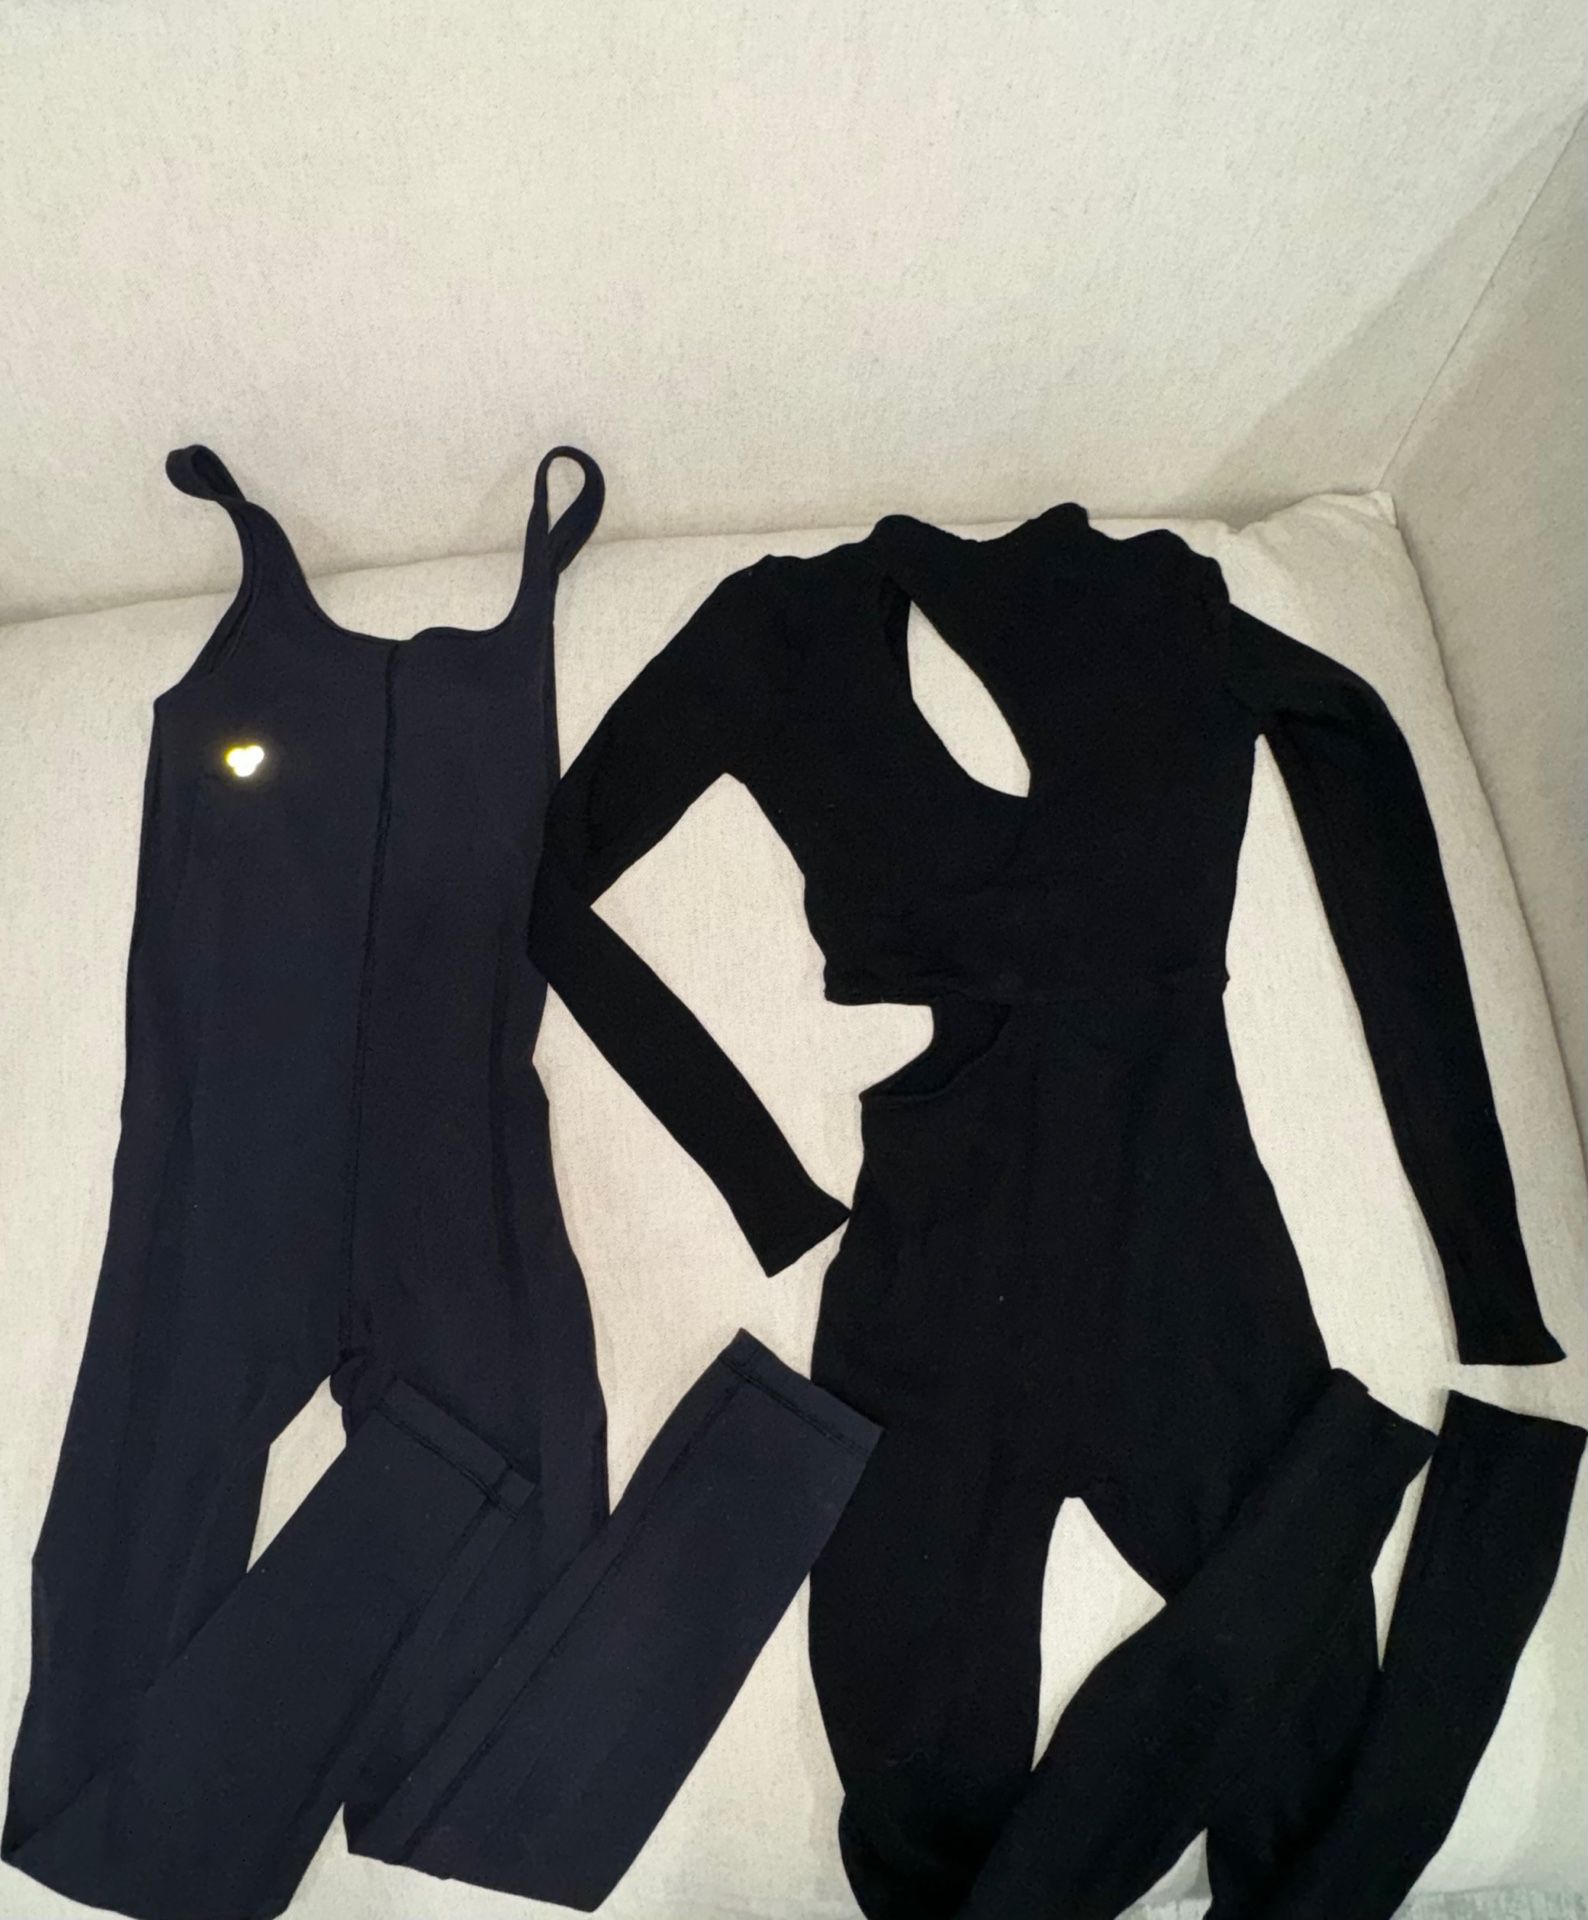 Aritzia & Naked wardrobe Jumpsuit (Worth $200)